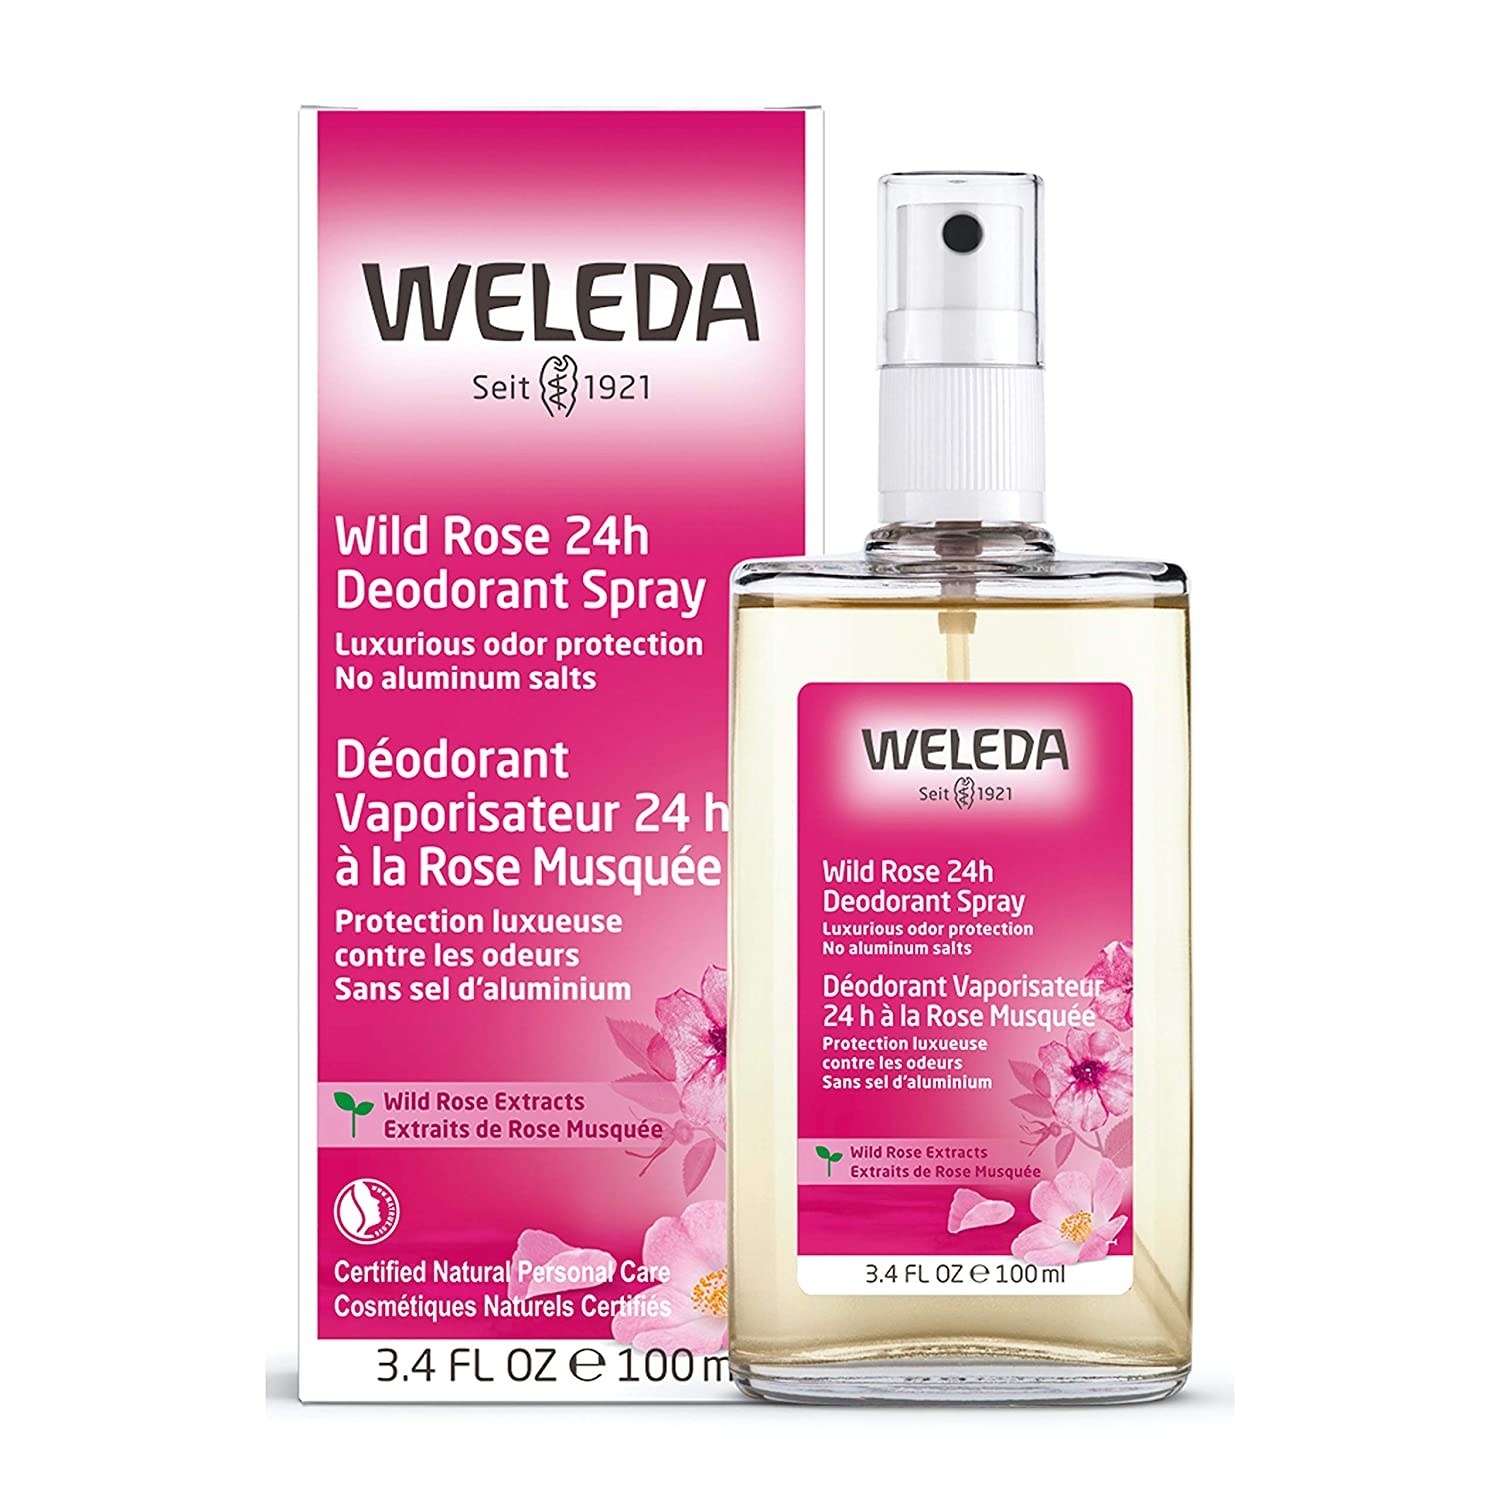 Product photo of Weleda wild rose deodorant spray